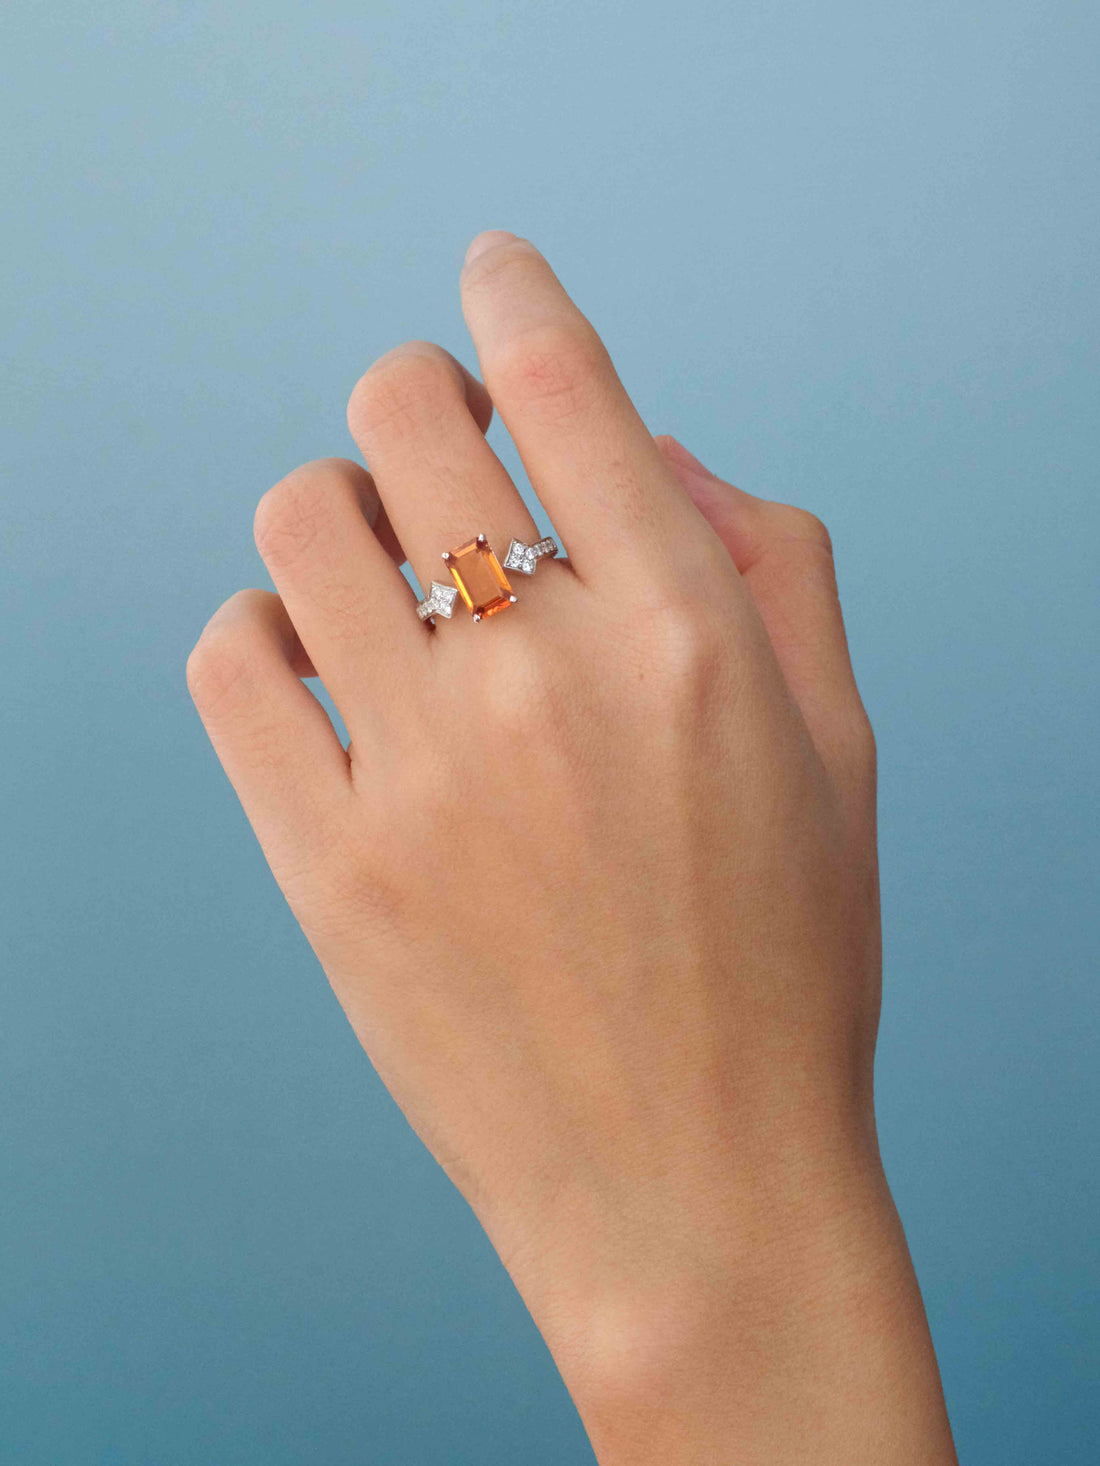 Orange Sapphire Octagonal Diamond Ring, 18k solid gold